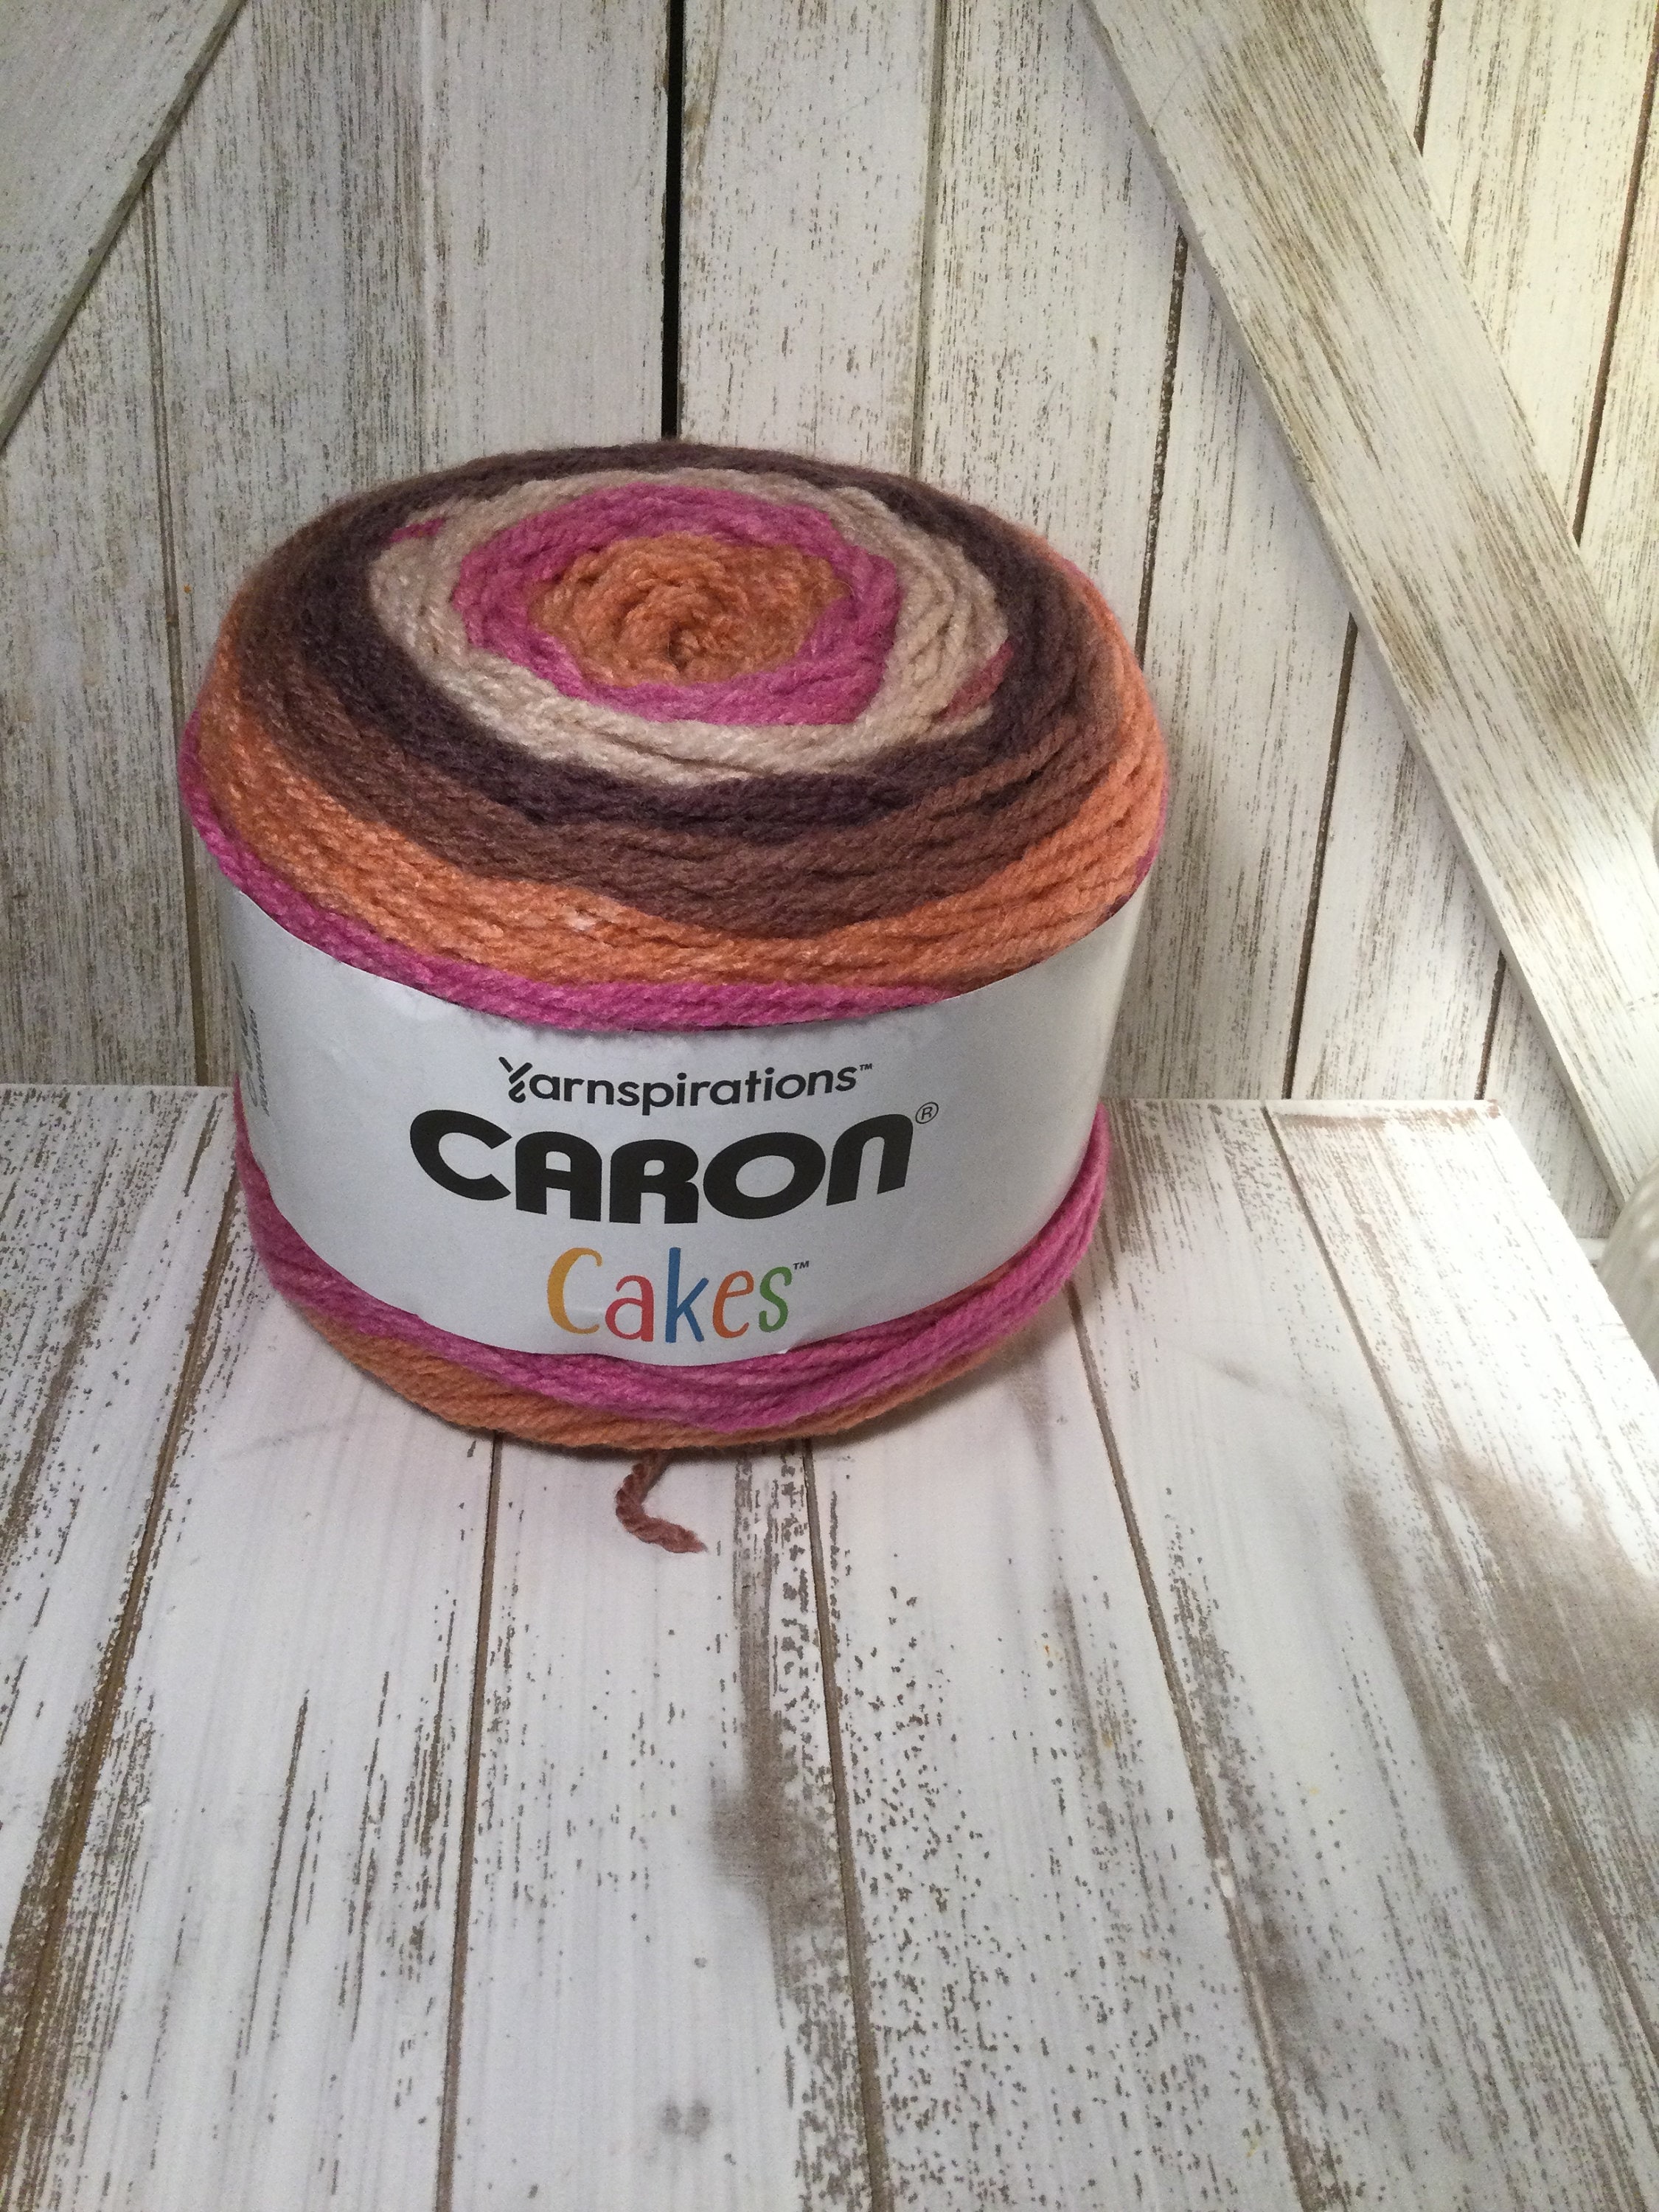 Caron Cinnamon Swirl Cakes Yarn in Cherry Punch | 8 | Michaels